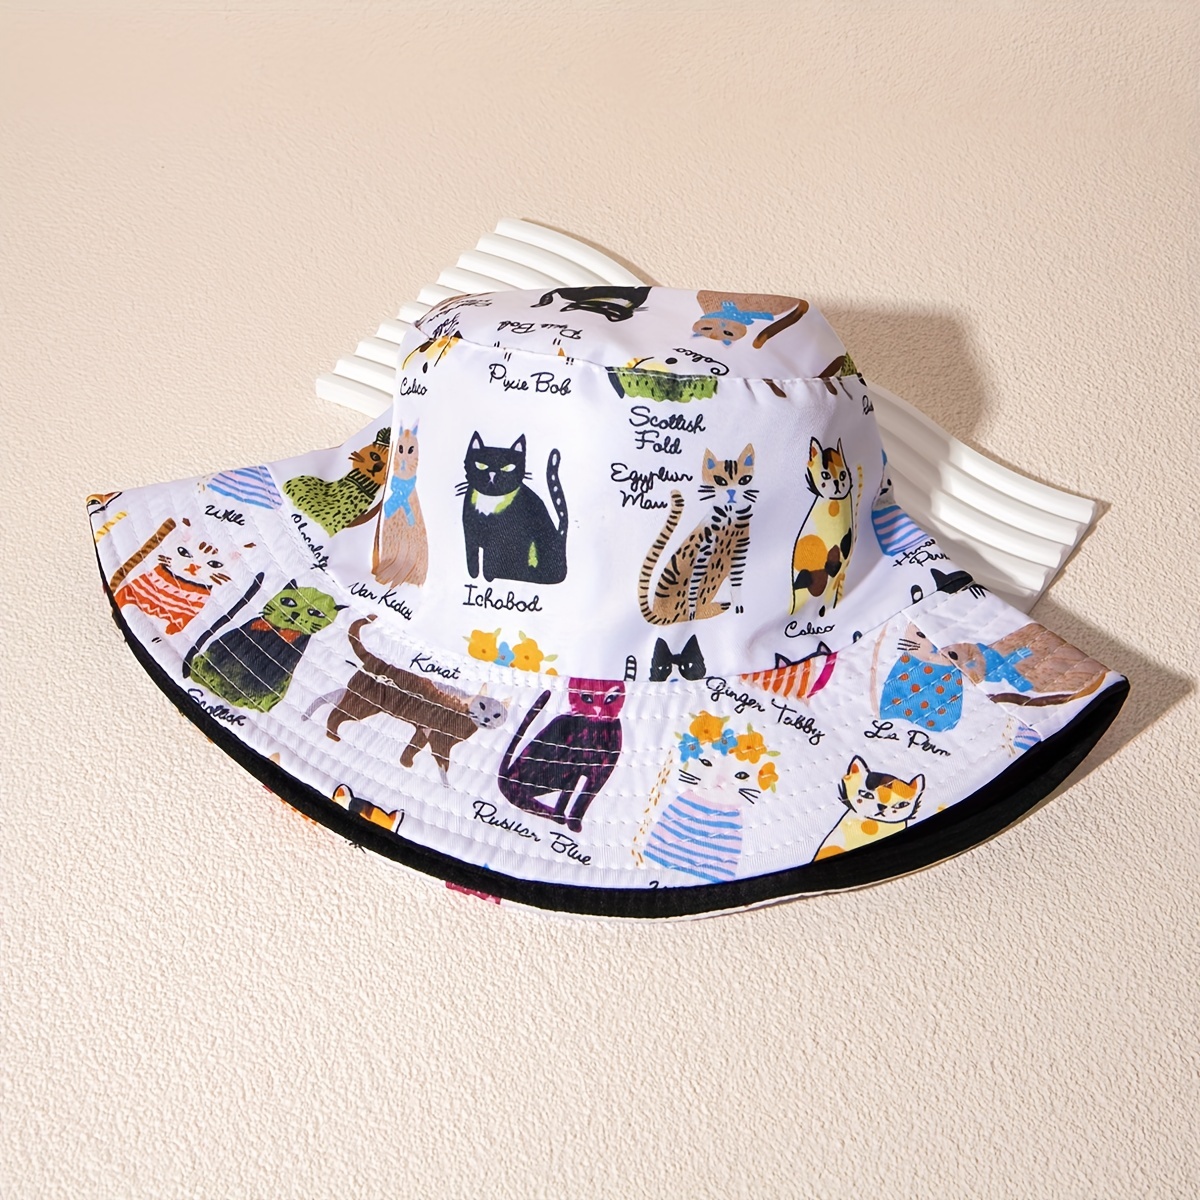 1pc Women Cartoon Cat Head Pattern Sun Protection Fashionable Bucket Hat  For Outdoor